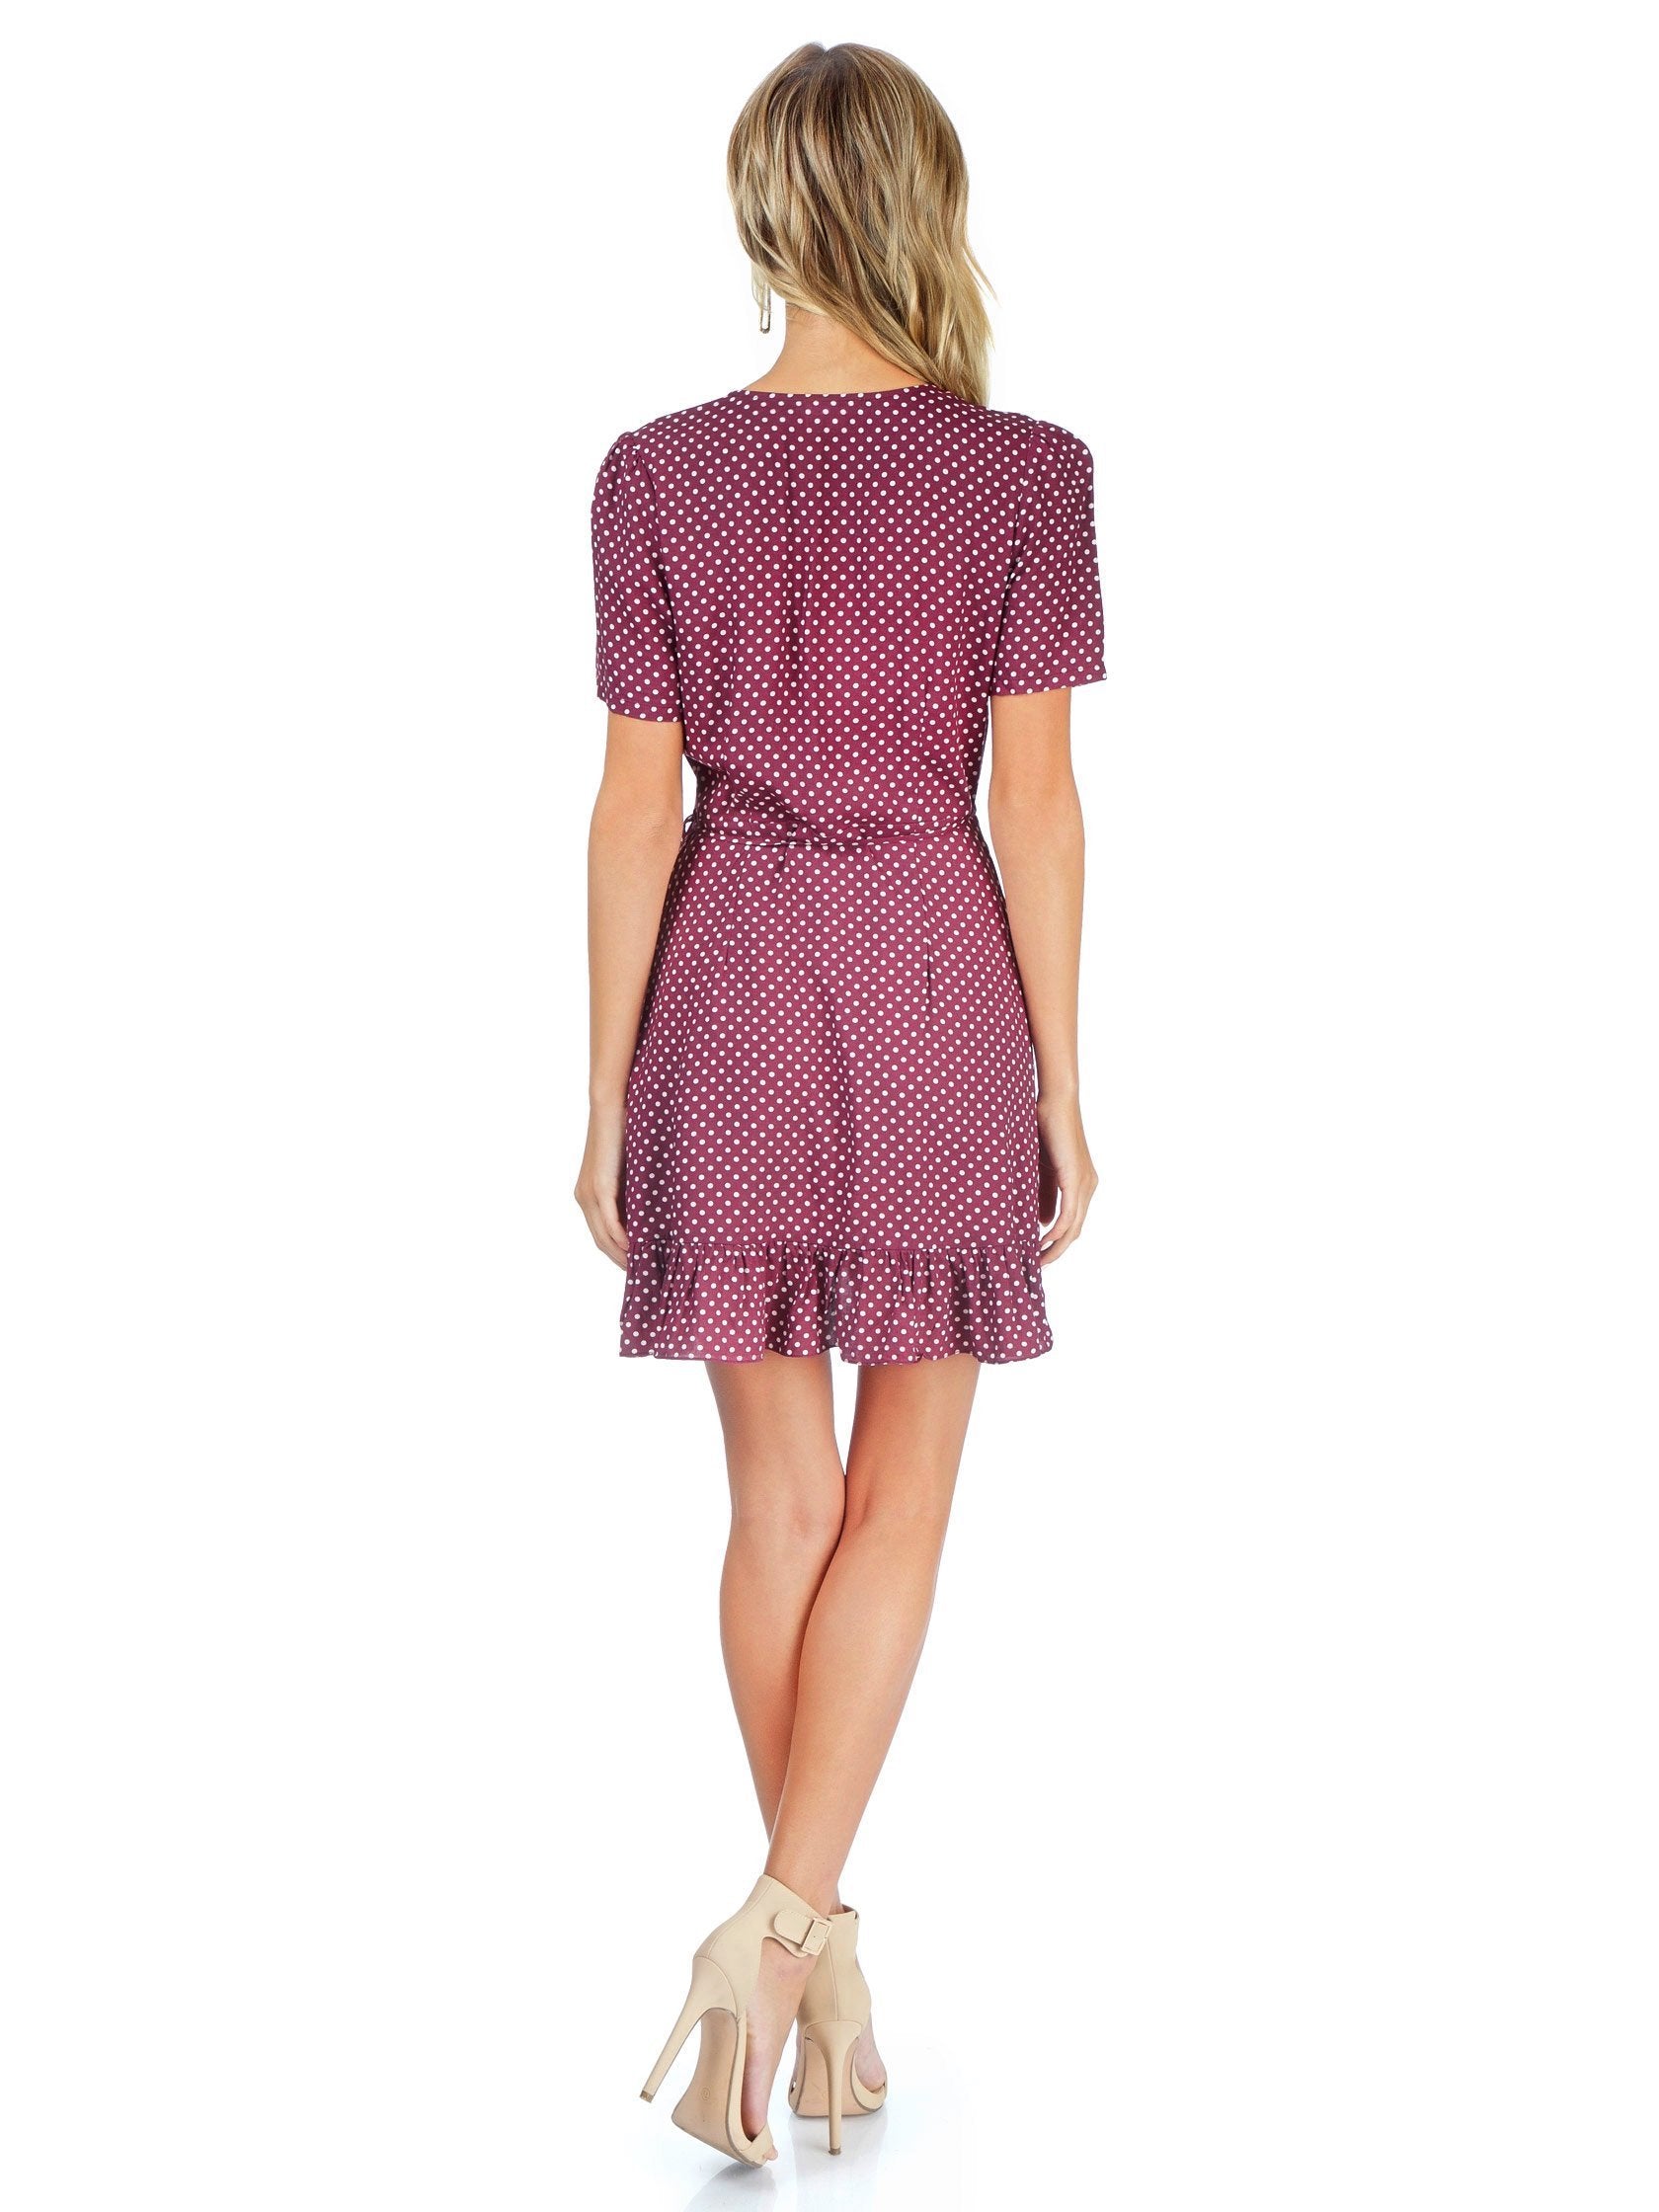 Girl wearing a dress rental from FashionPass called Kat Mini Dress